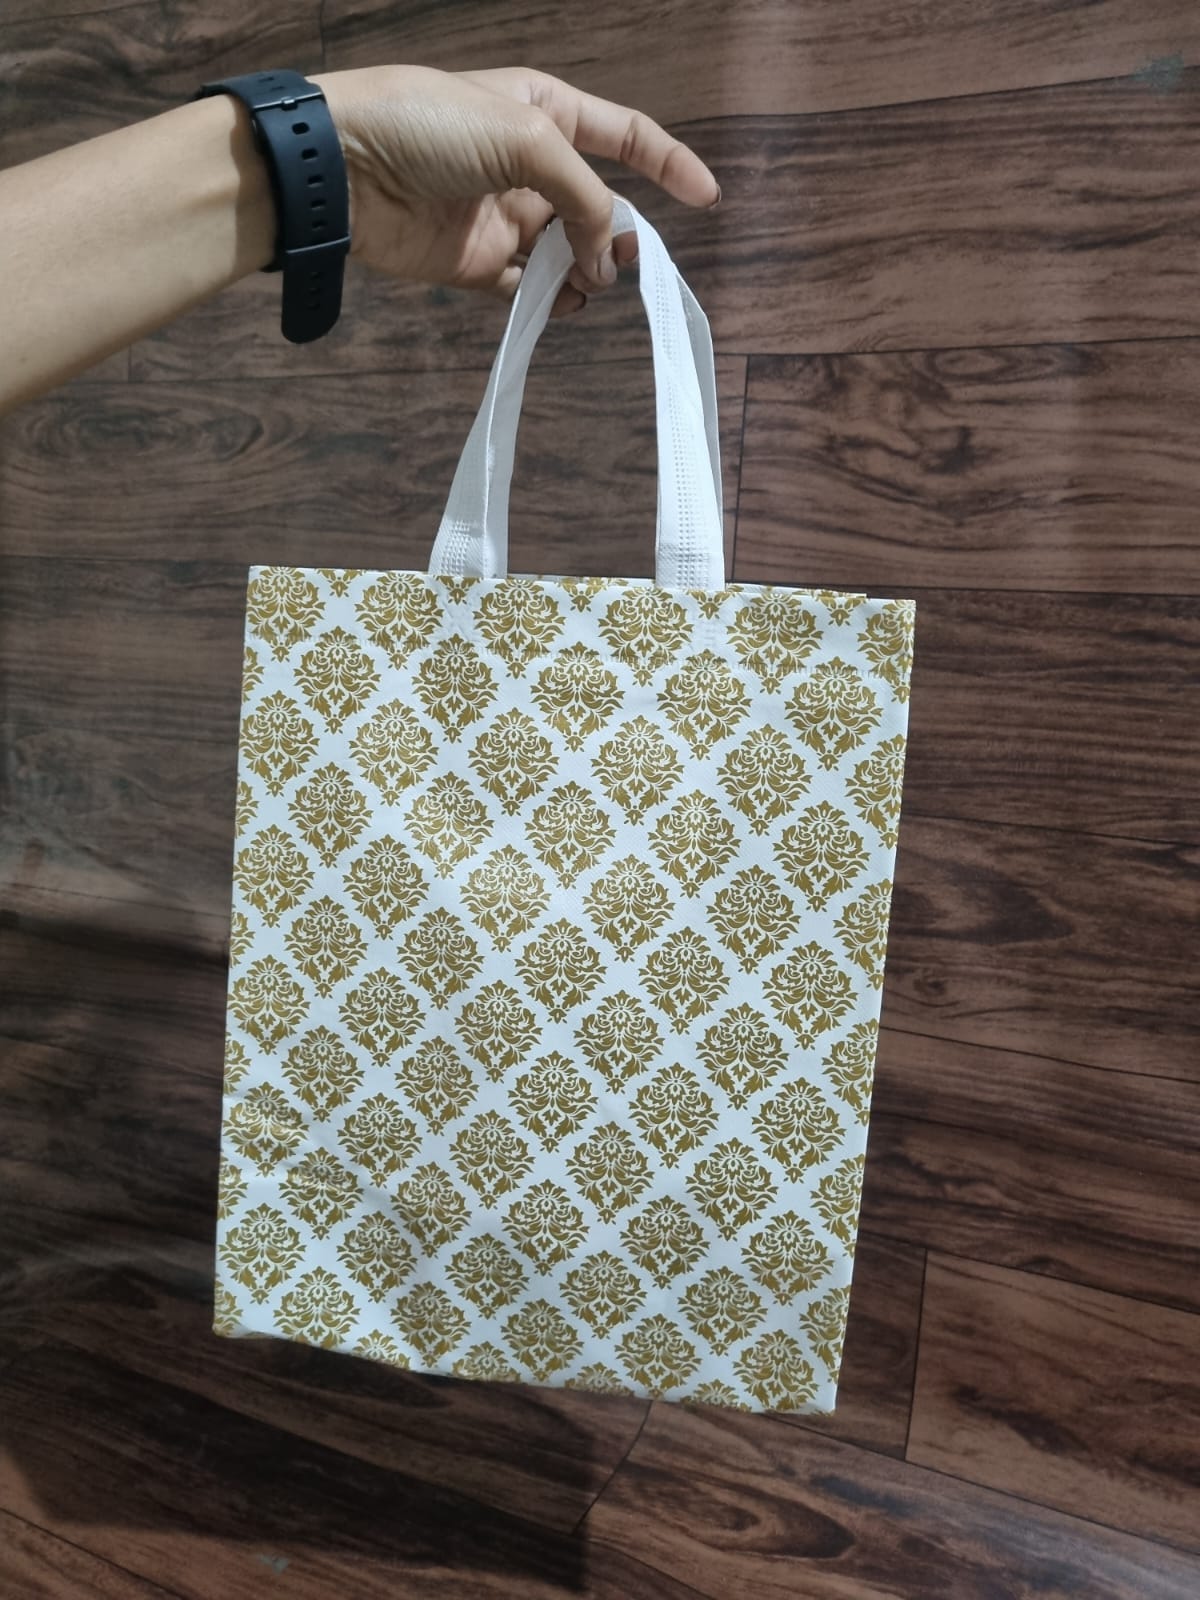 Mumbai market Gift Boxes & Paper Bags loop-m2 (P2) Small Loop Handle Printed Shopping Bags size-30x24x10cm